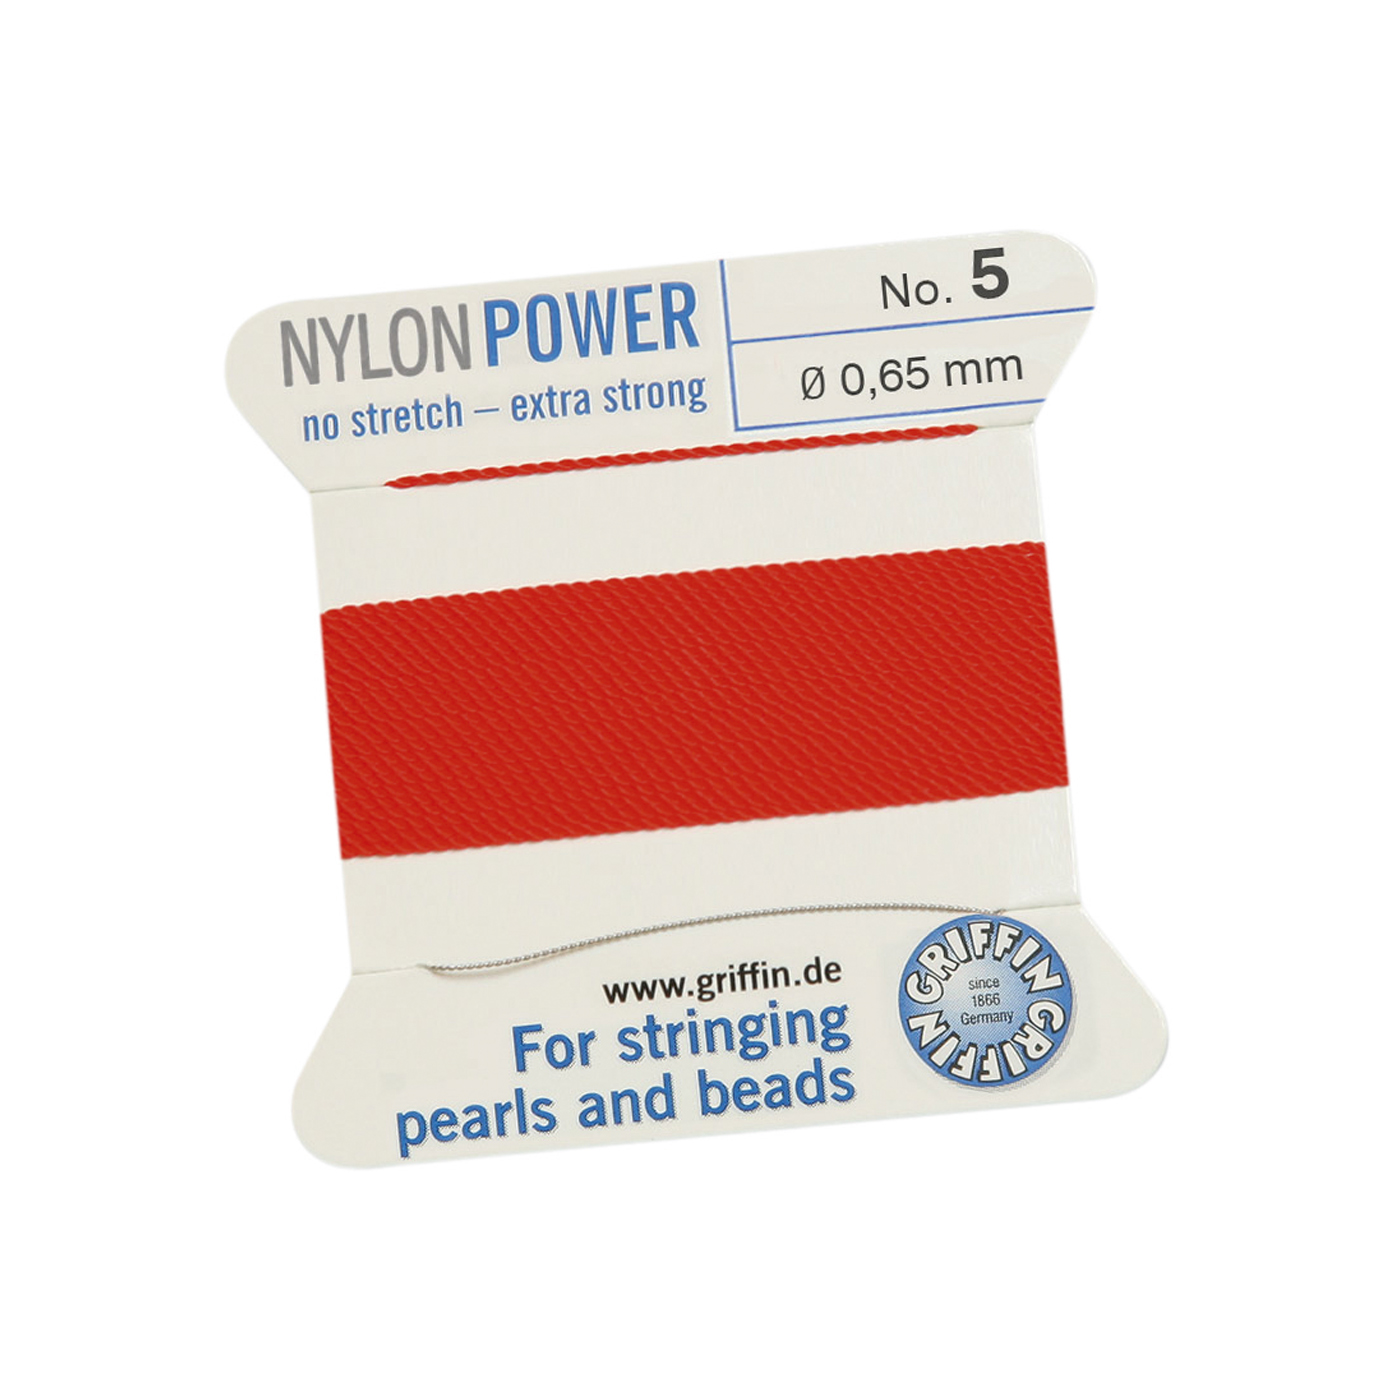 Bead Cord NylonPower, Red, No. 5 - 2 m